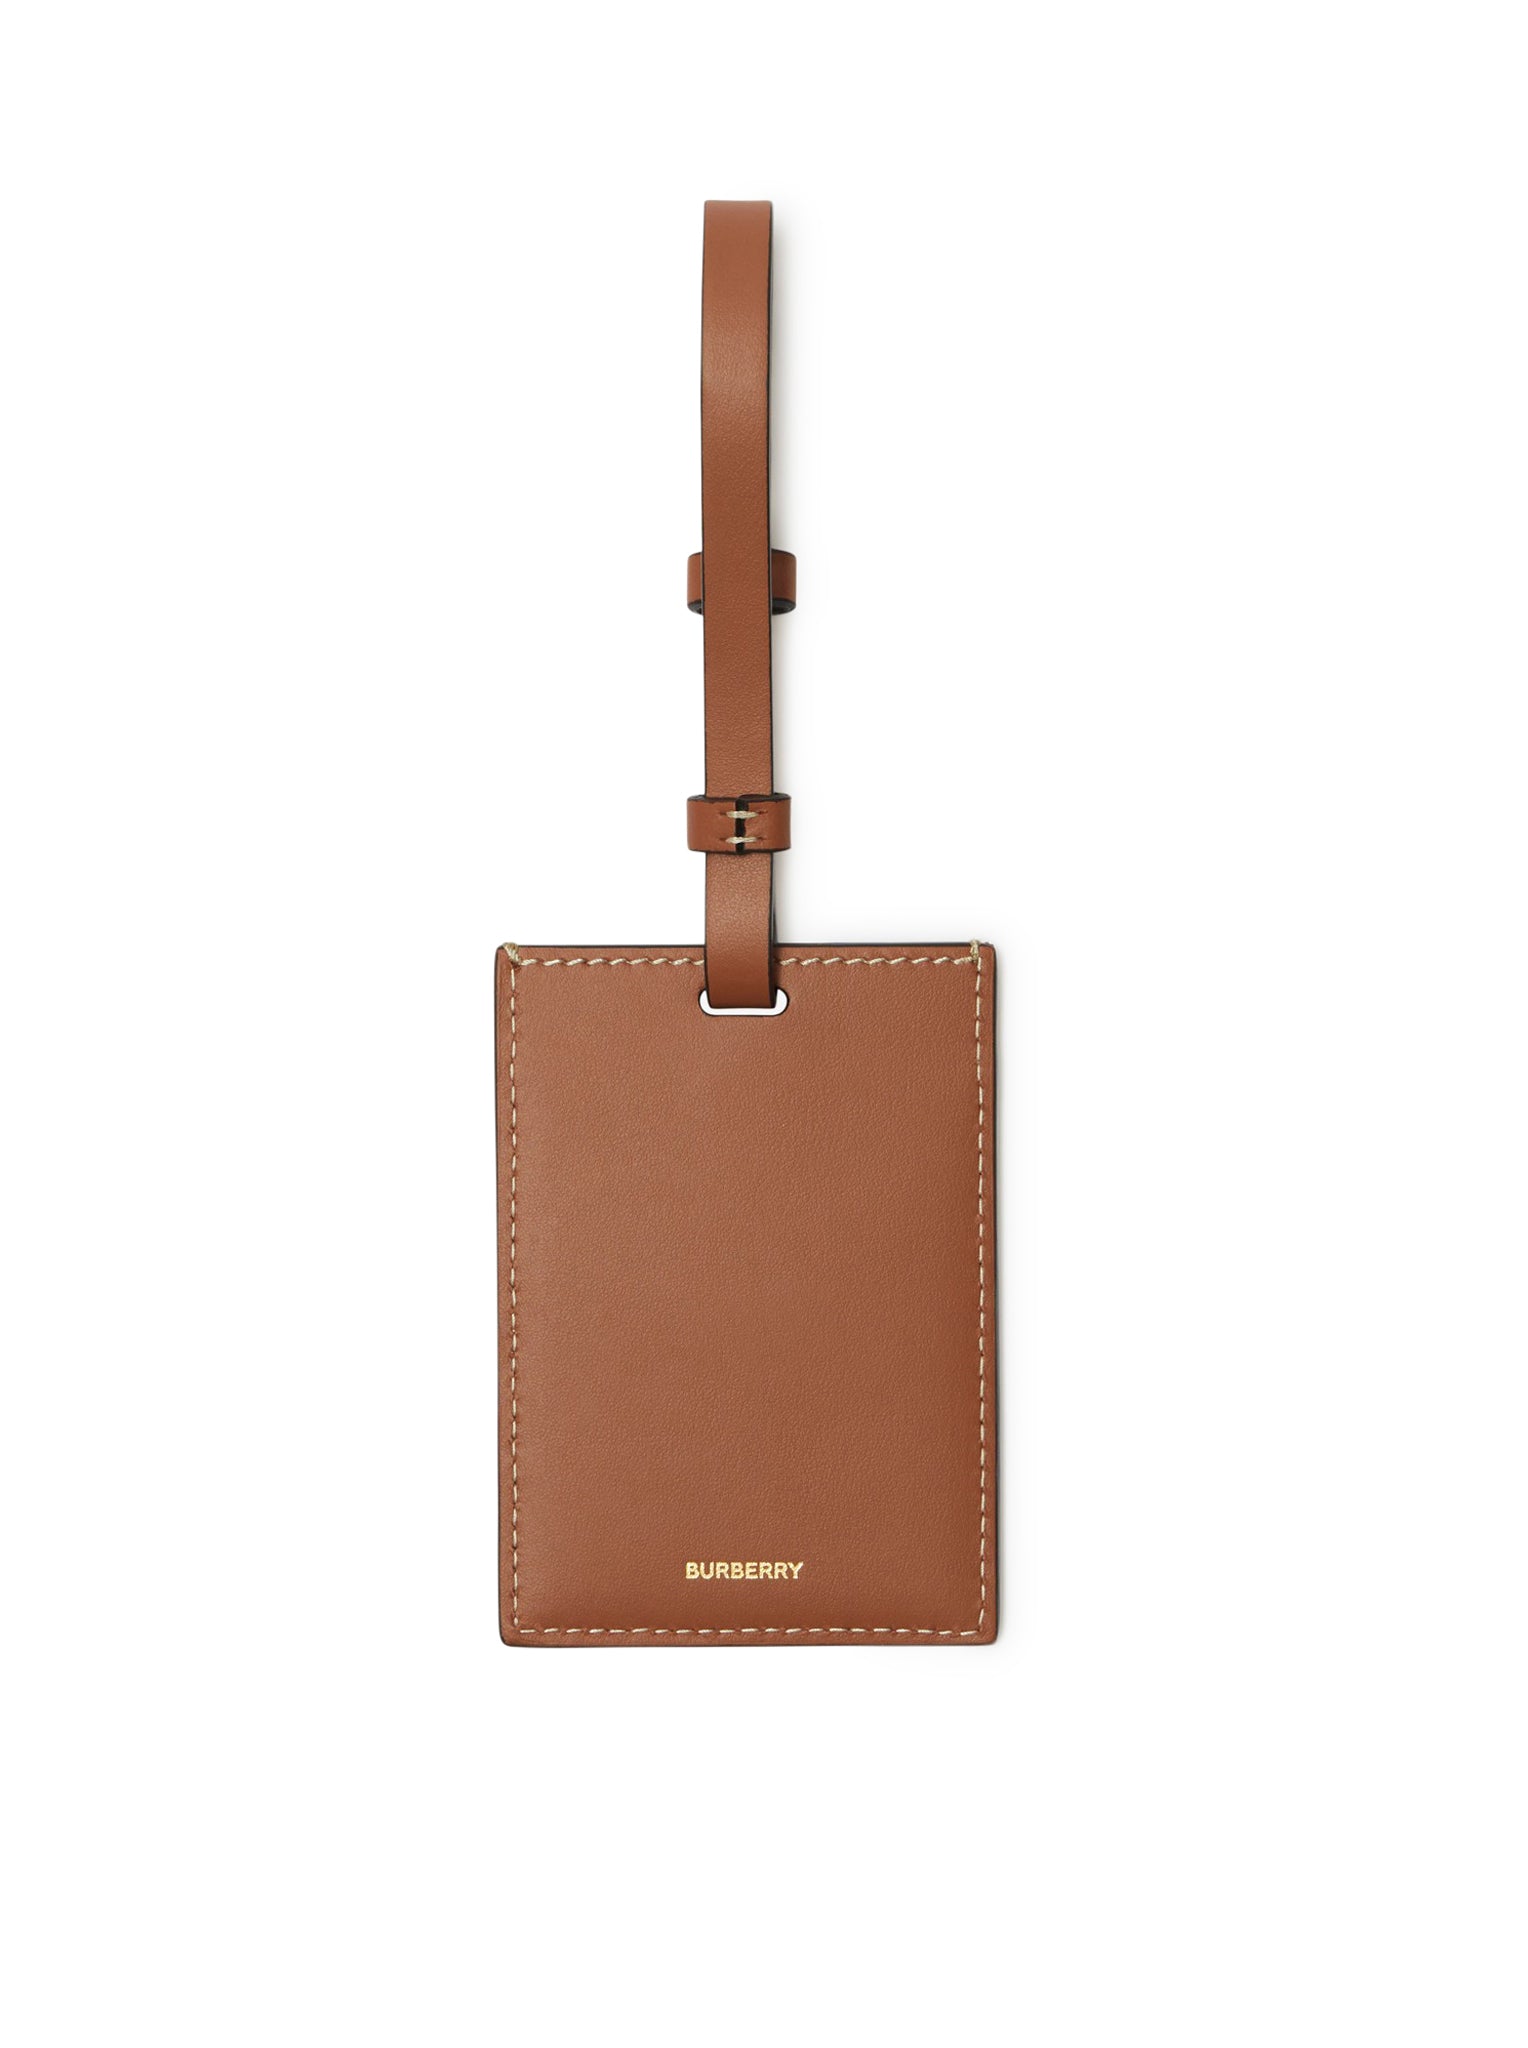 Olympia leather handbag Burberry Burgundy in Leather - 29121749